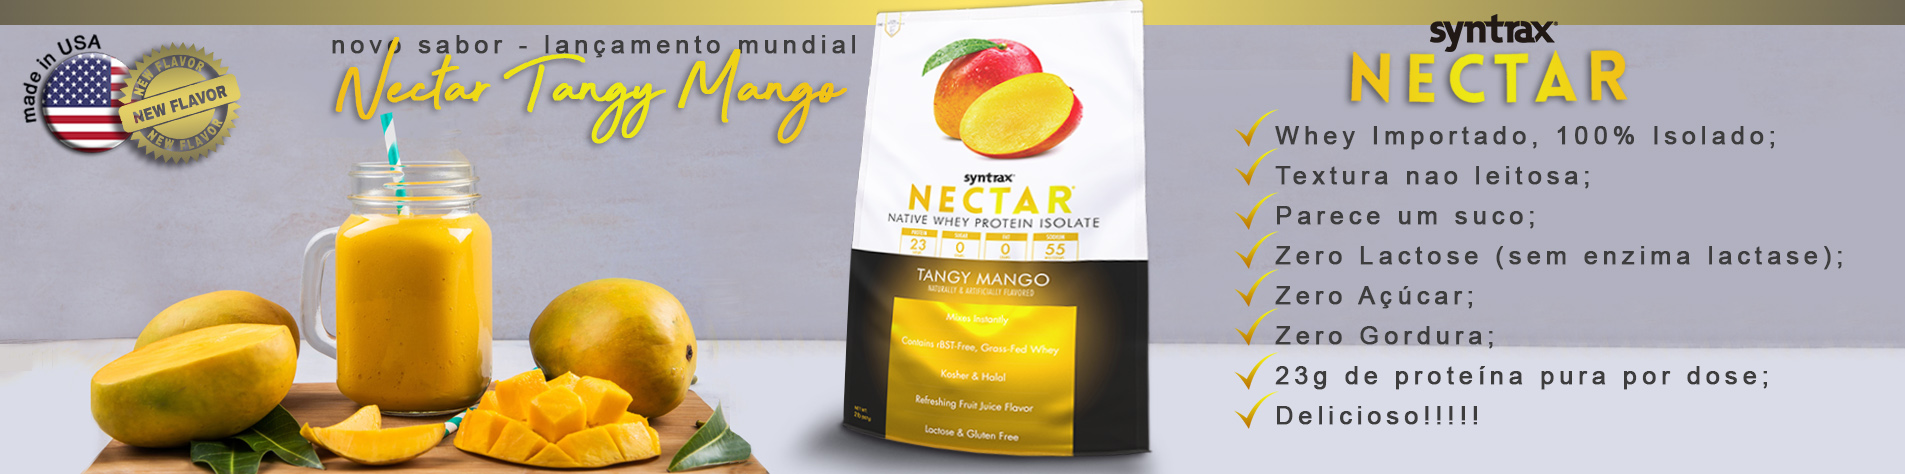 Nectar Mango - novo sabor